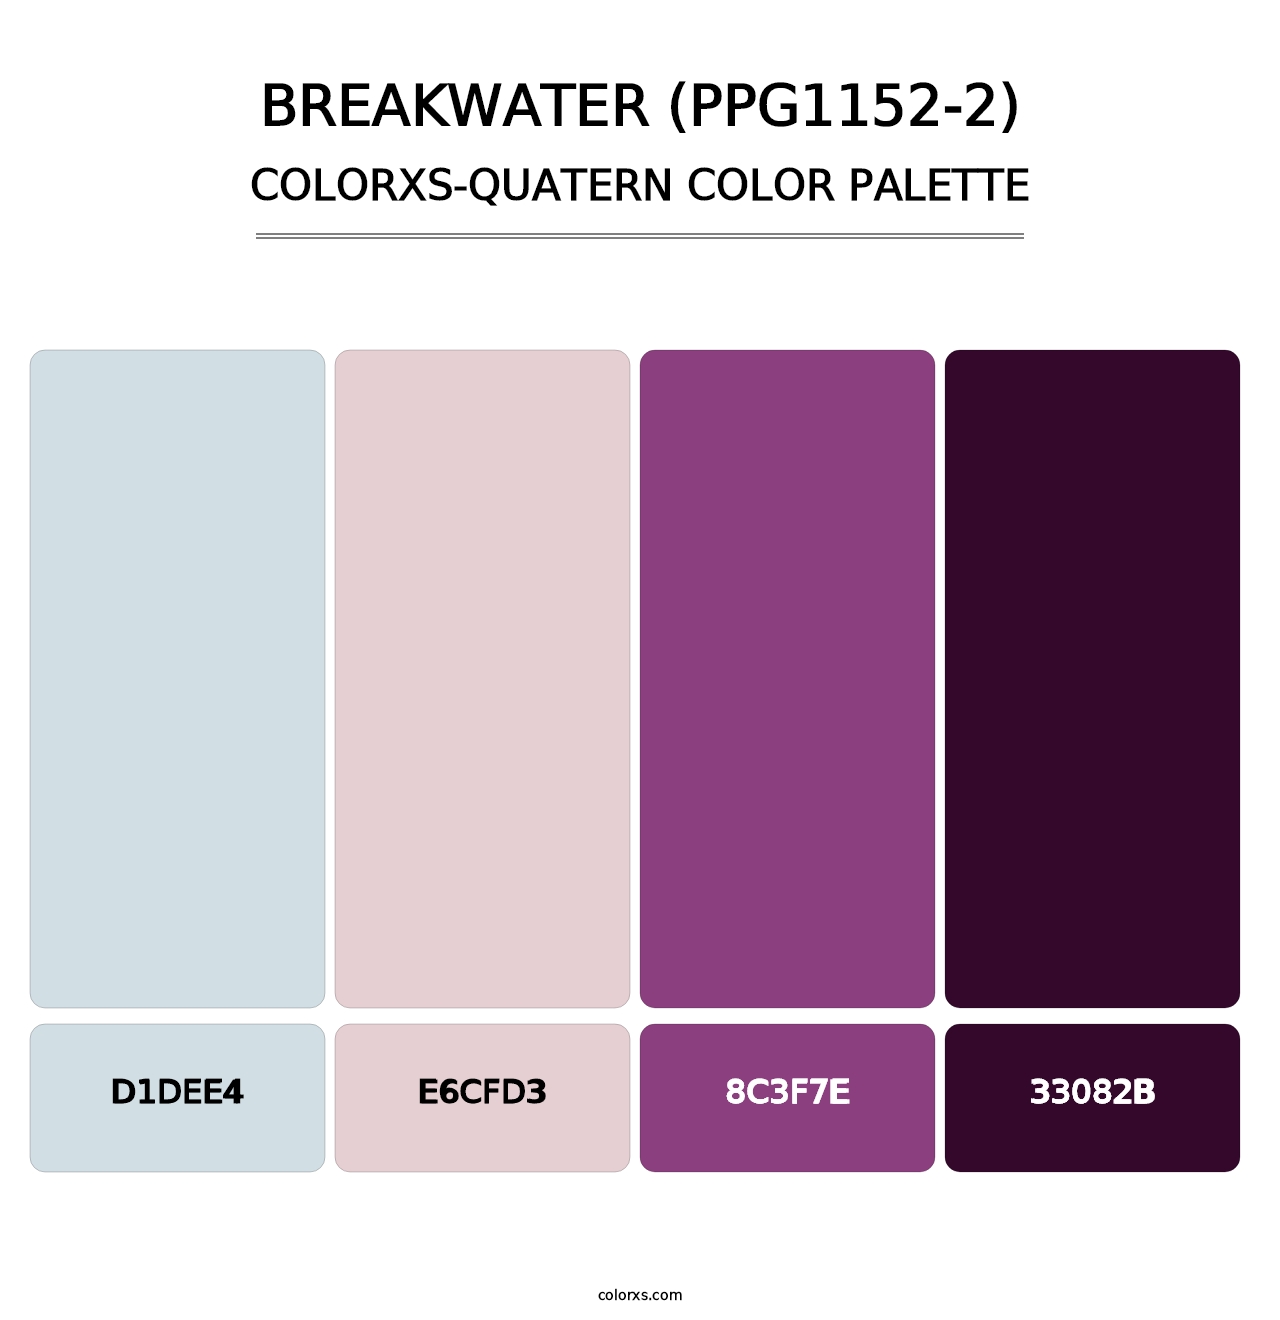 Breakwater (PPG1152-2) - Colorxs Quatern Palette